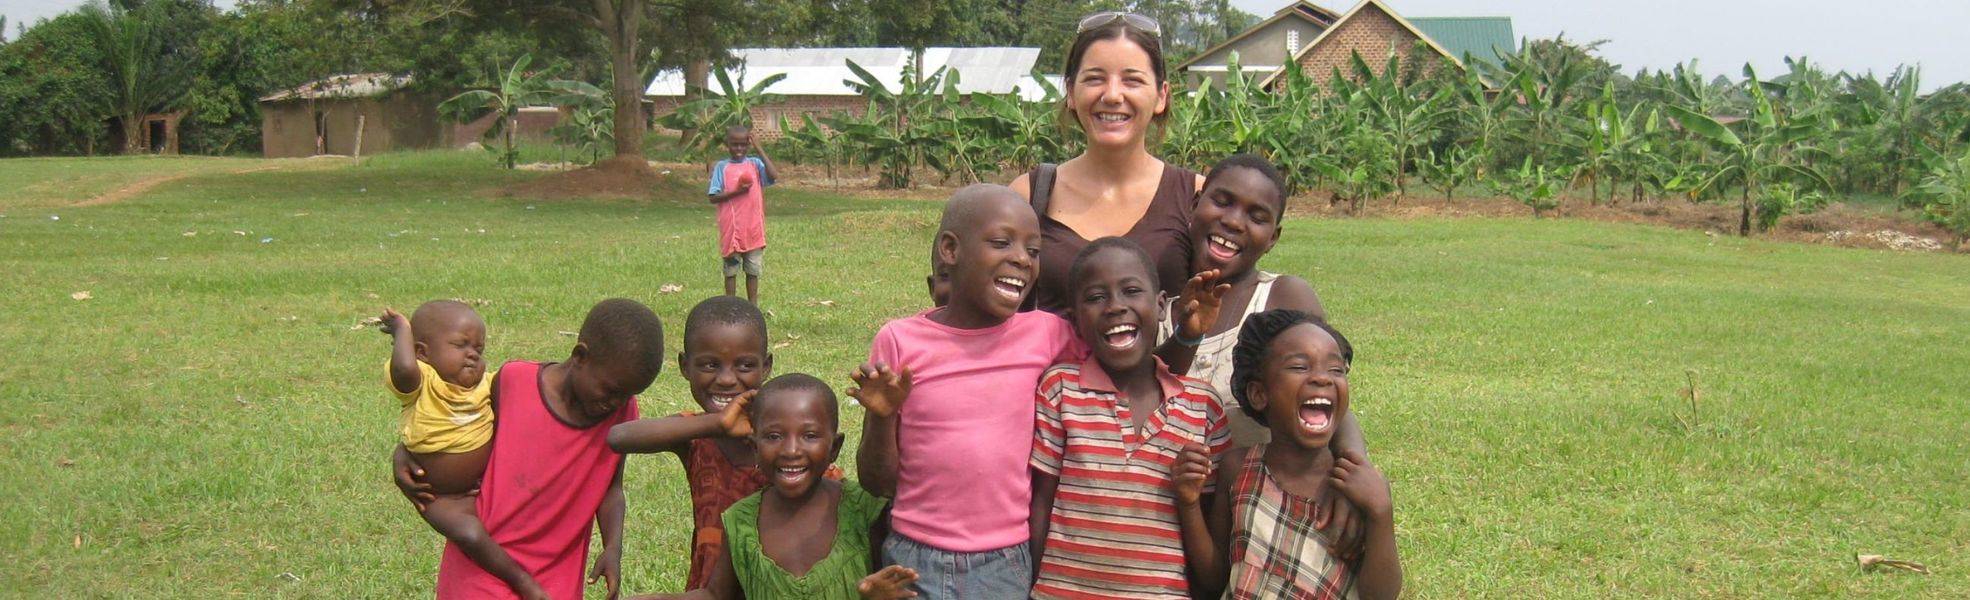 Volunteer beim Auslandspraktikum in Uganda mit Kindern